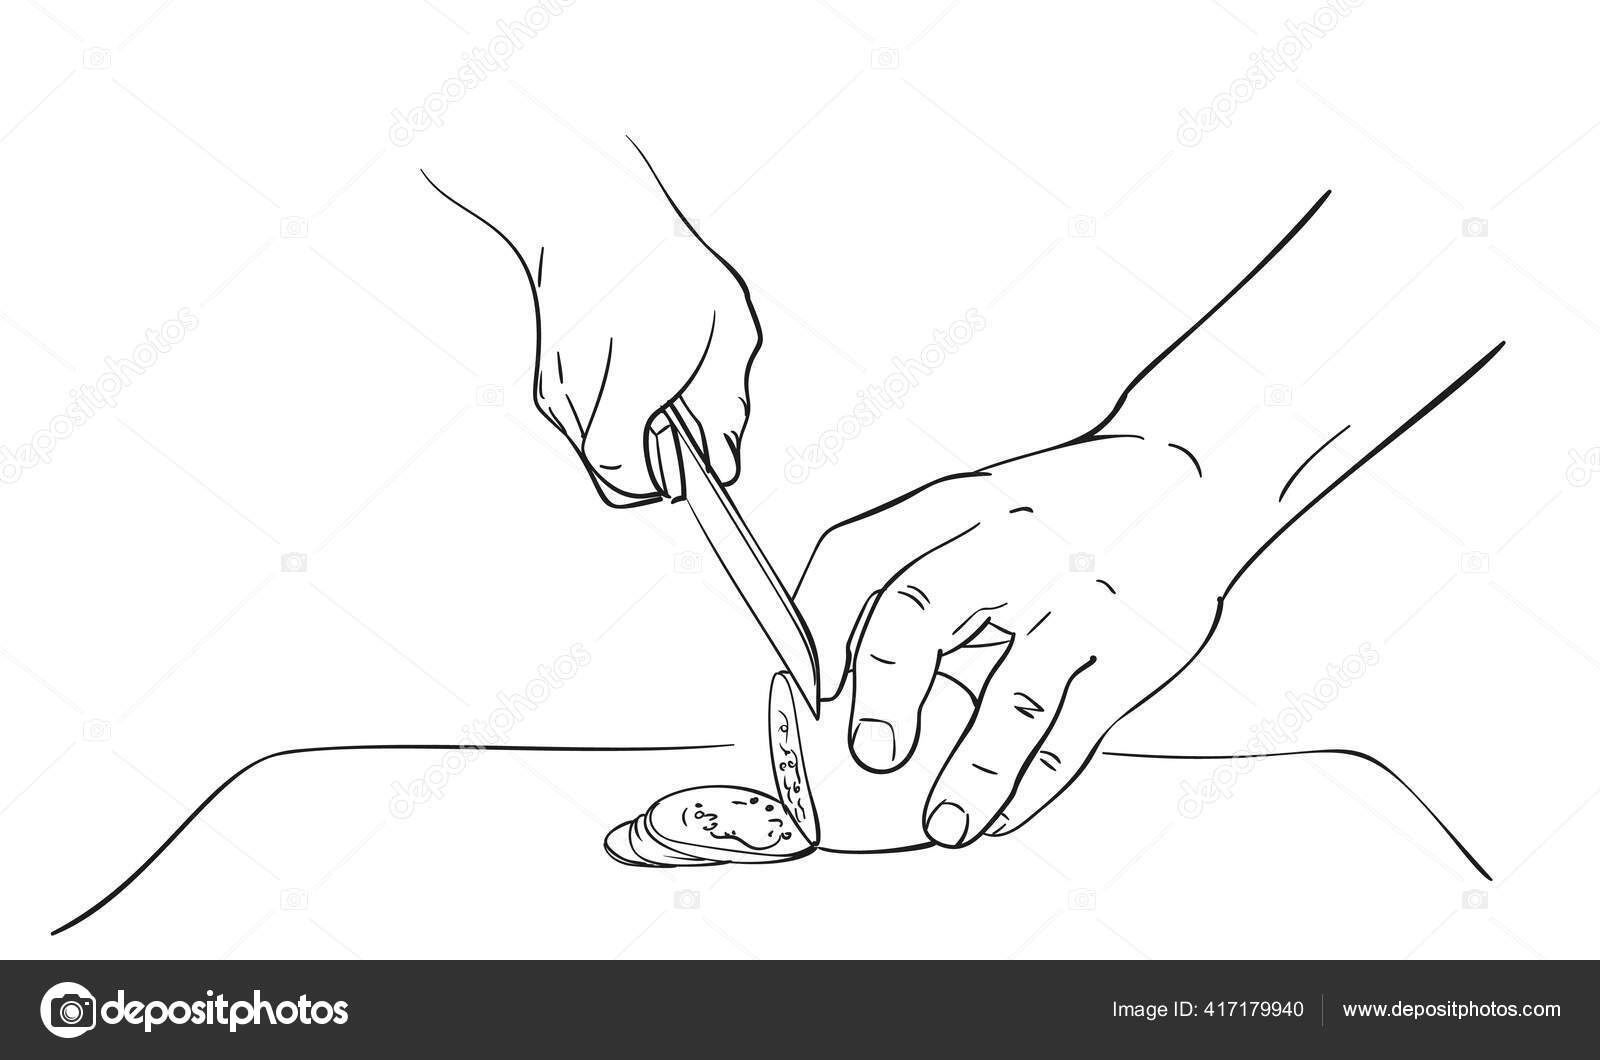 https://st4.depositphotos.com/1004472/41717/v/1600/depositphotos_417179940-stock-illustration-close-hands-cutting-vegetable-knife.jpg